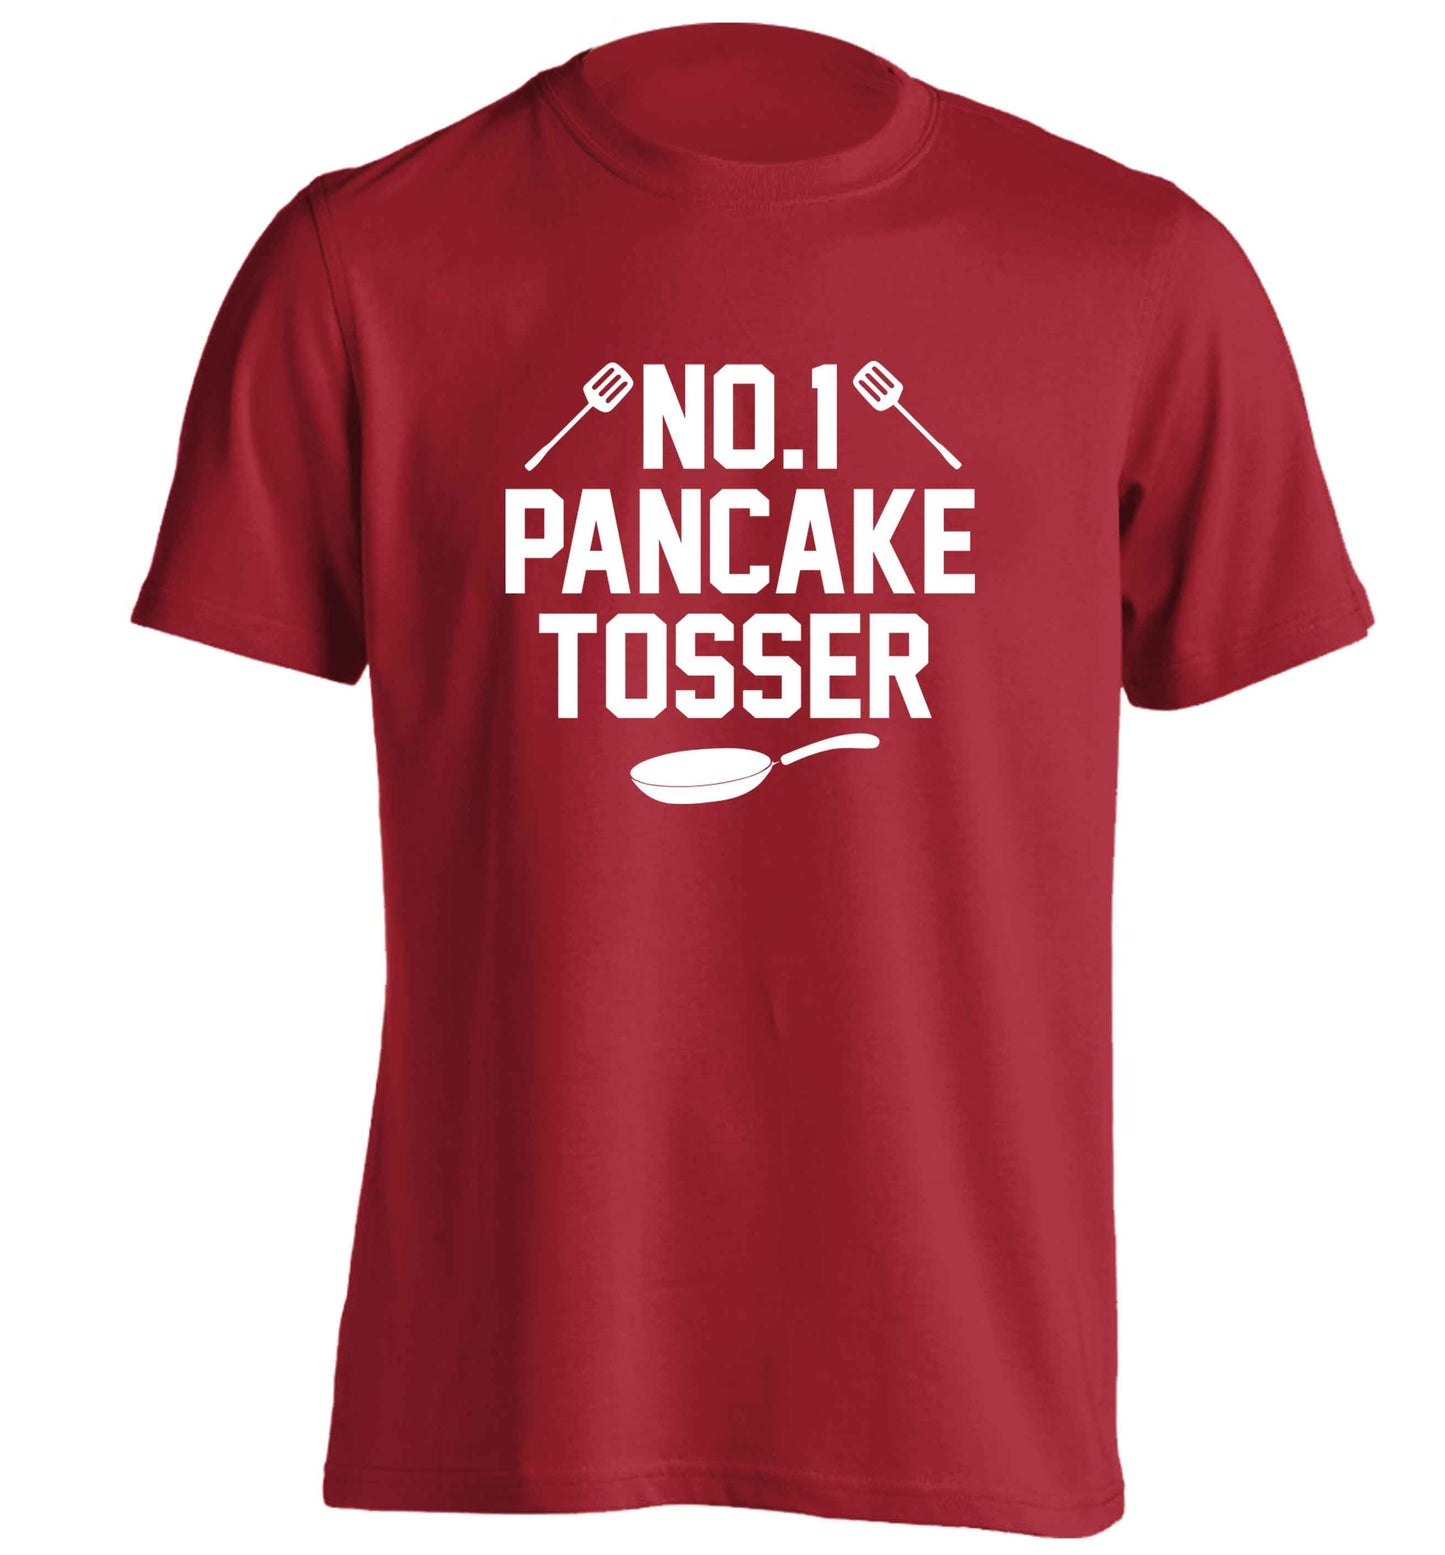 No.1 Pancake tosser adults unisex red Tshirt 2XL